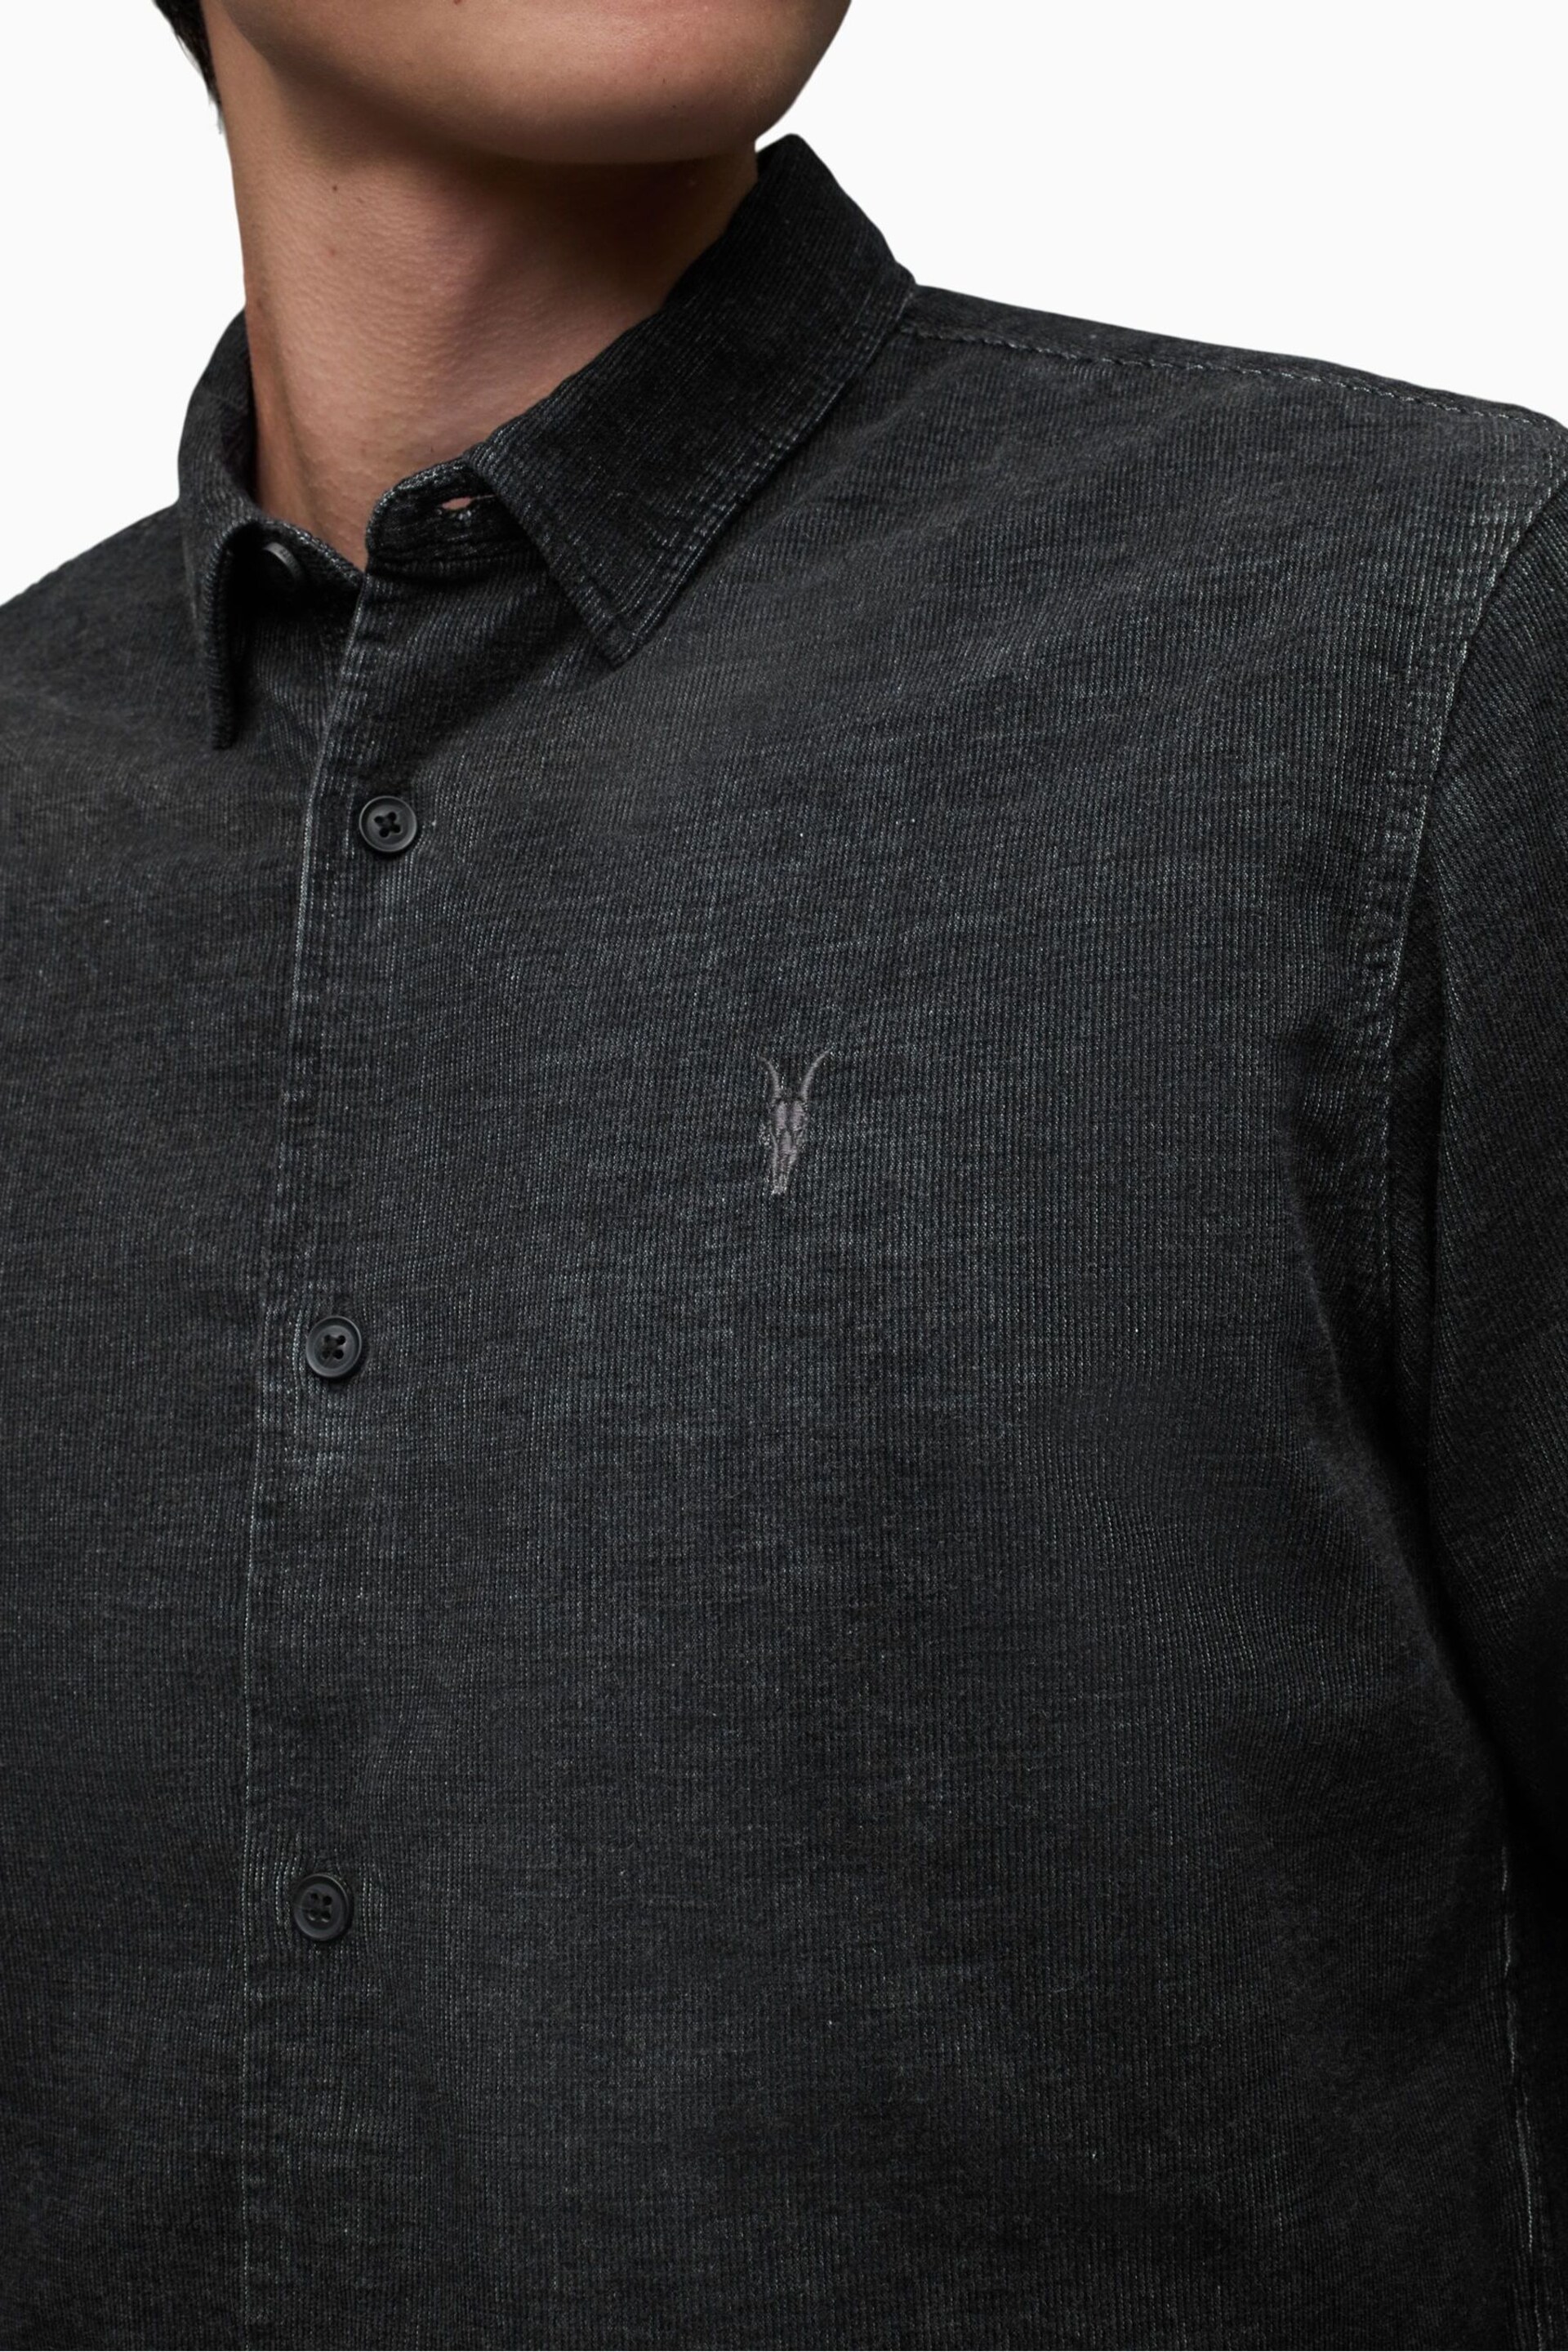 AllSaints Black Long Sleeve Lorella Shirt - Image 4 of 5